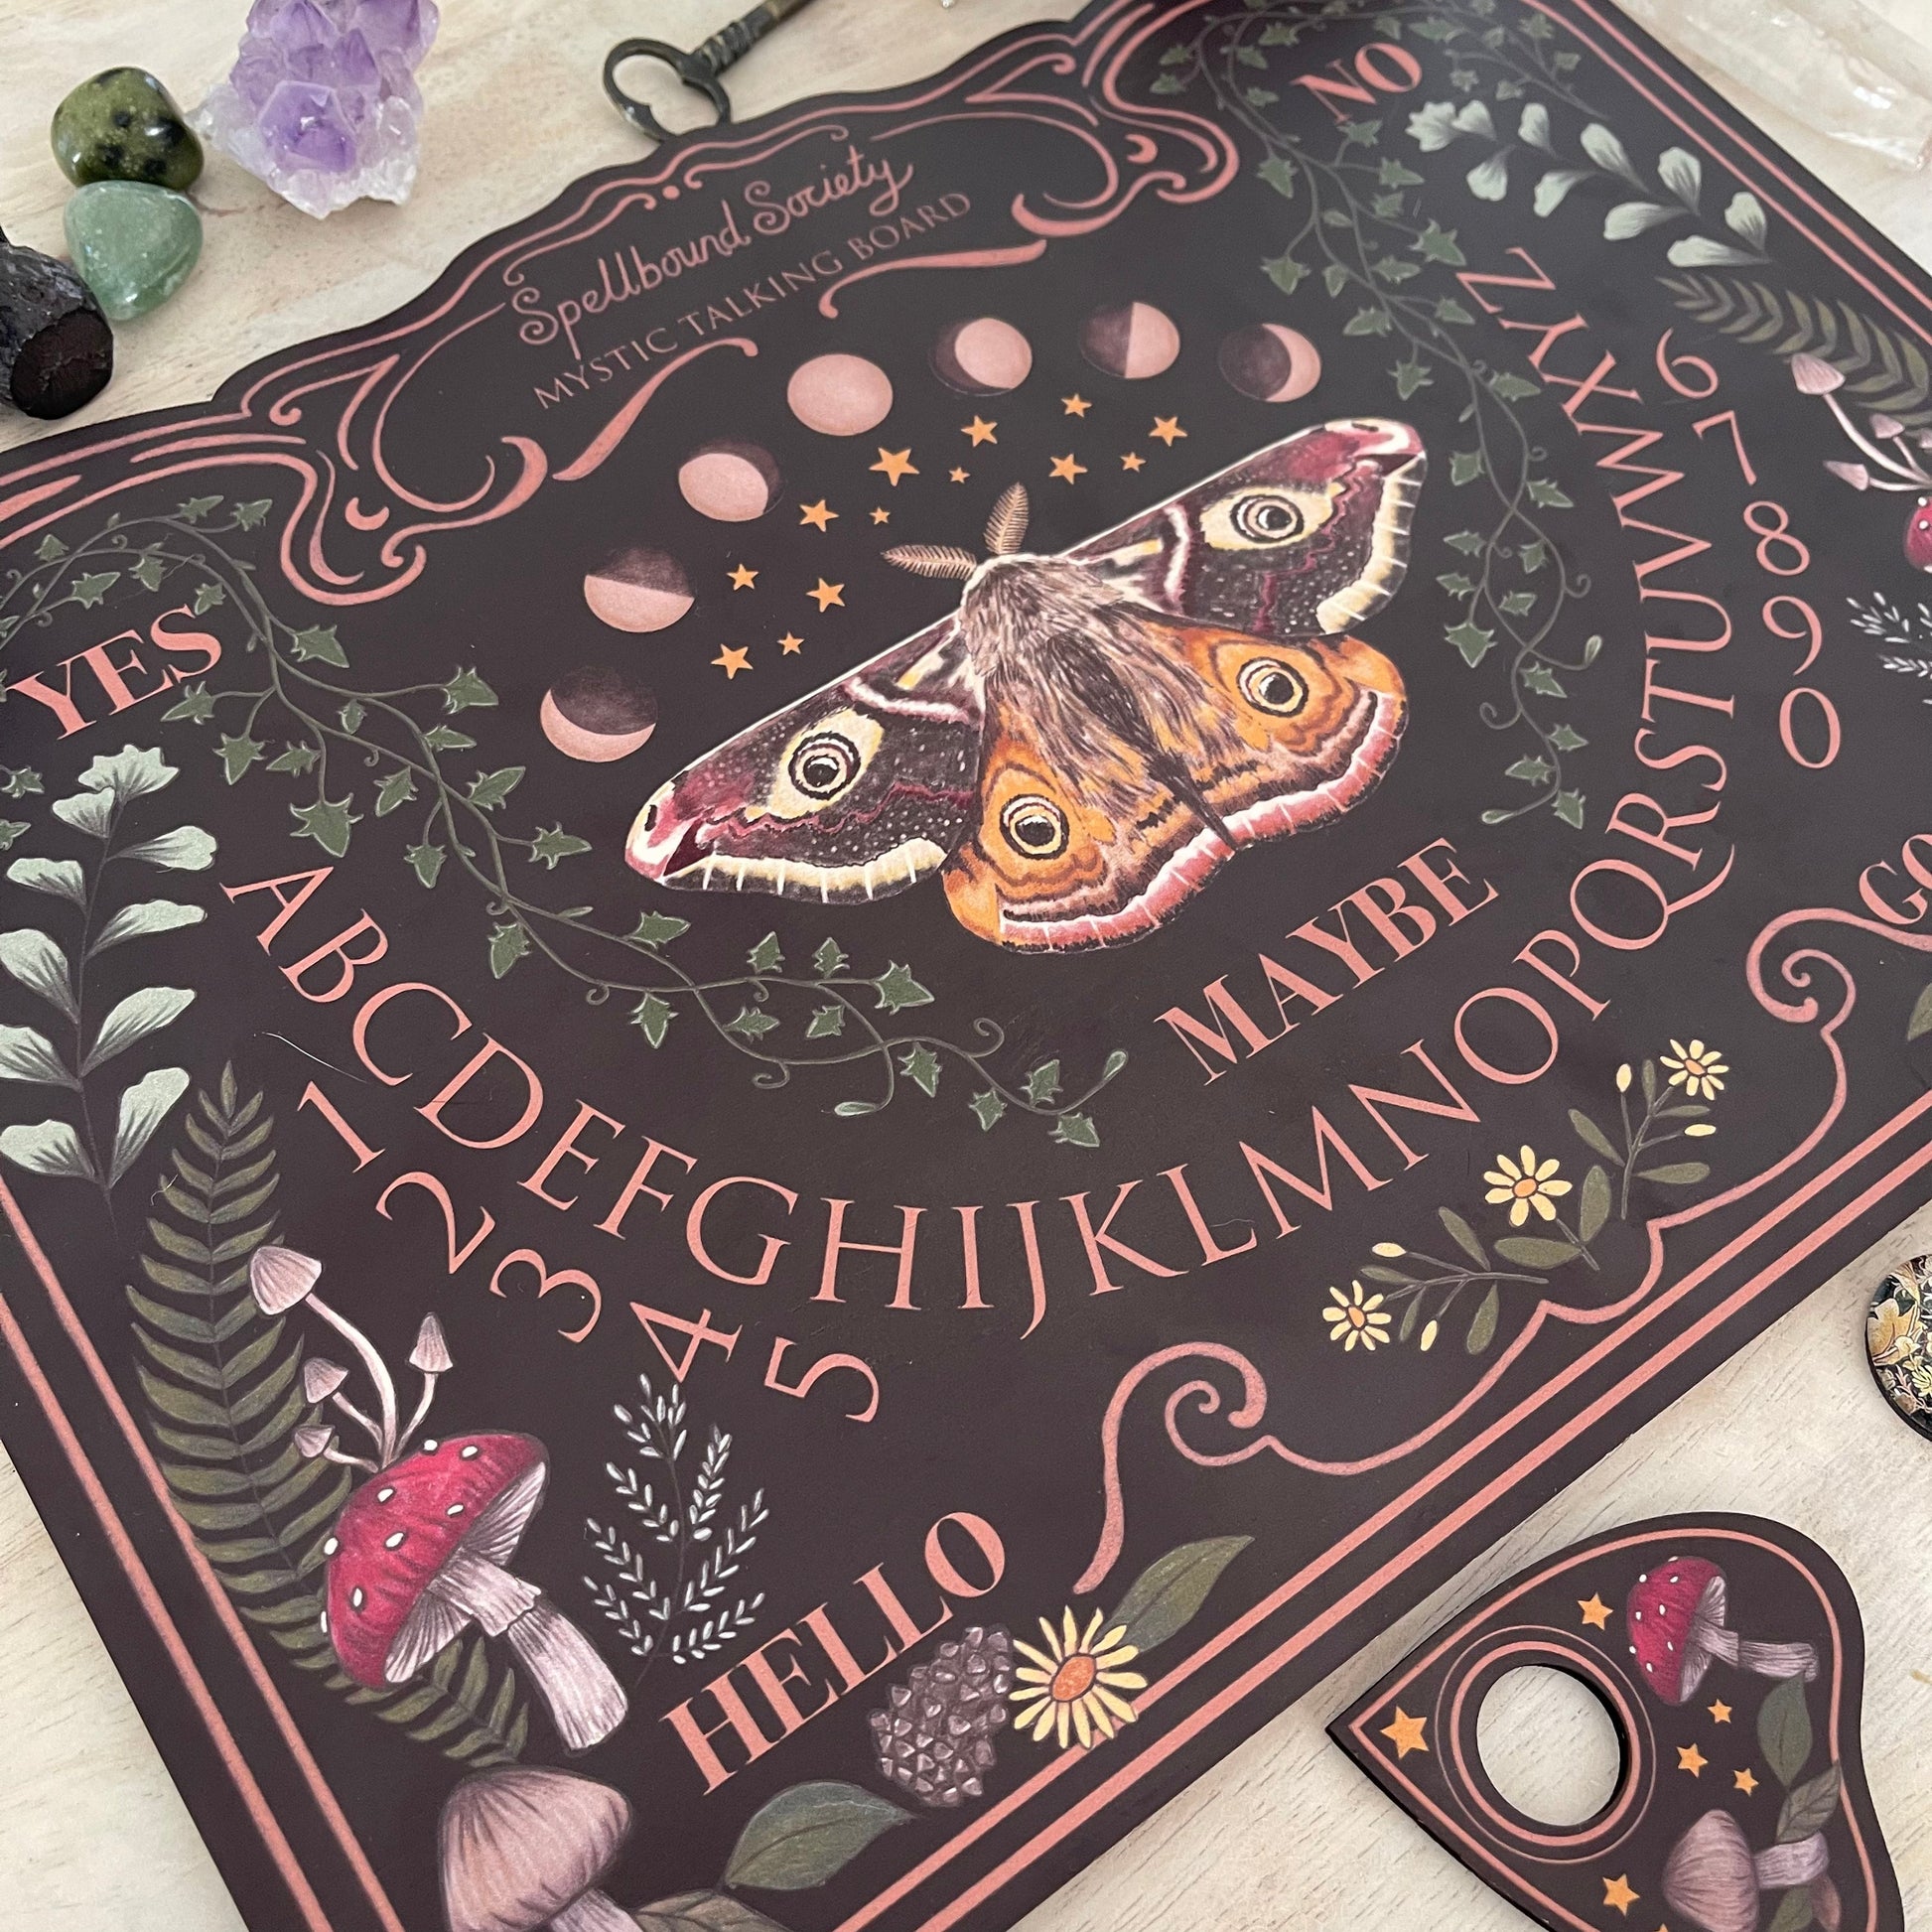 Beginners witchcraft Authentic Ouija Board. Beautiful hand-drawn dark moth and mushroom ouija board spirit board for witchcraft